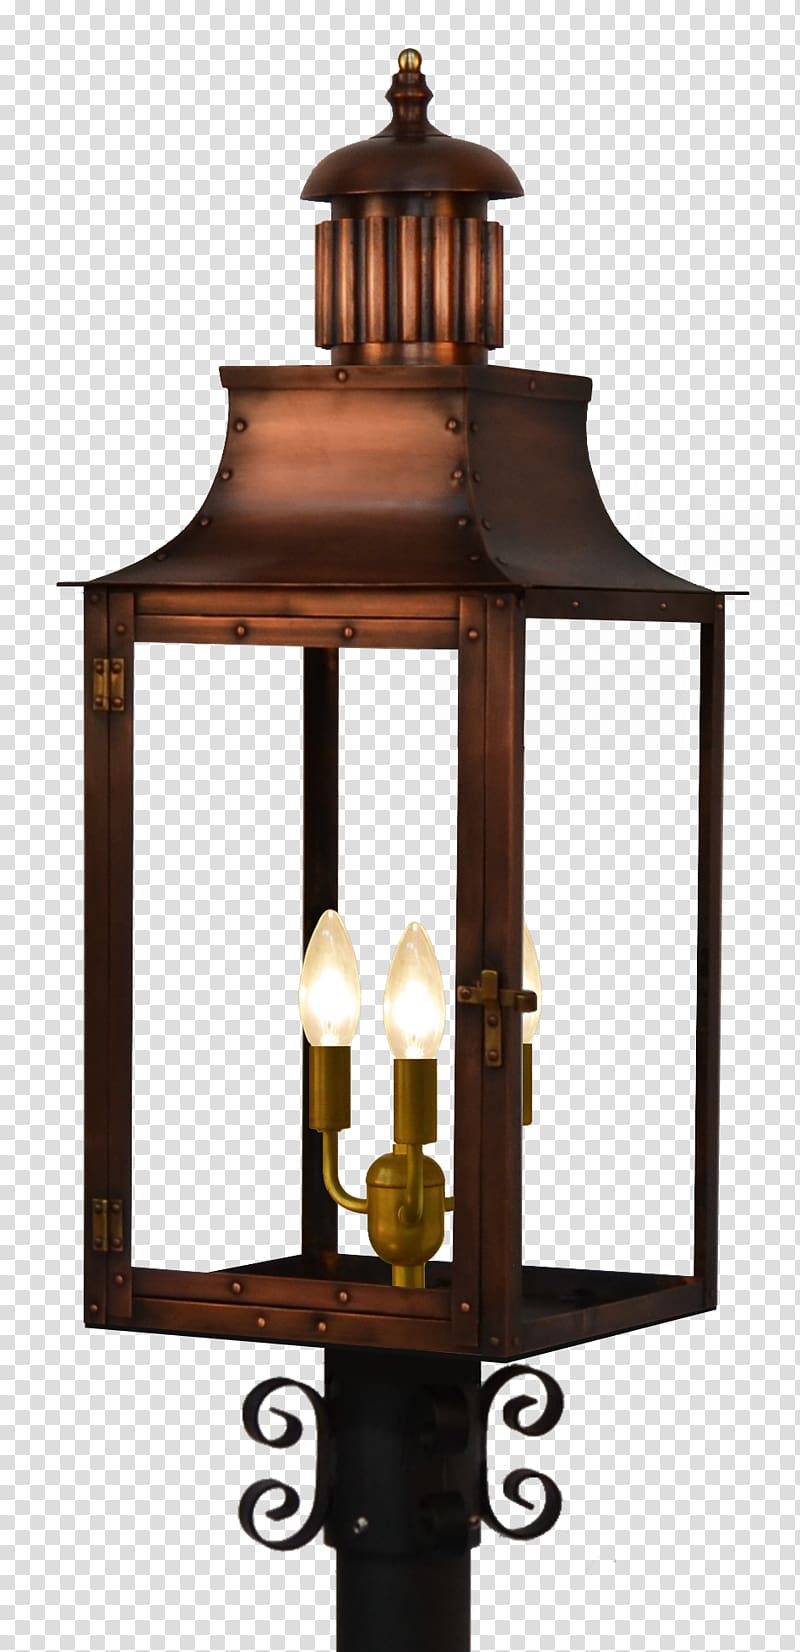 Lantern Light fixture Lighting Electricity Lamp, kongming latern transparent background PNG clipart